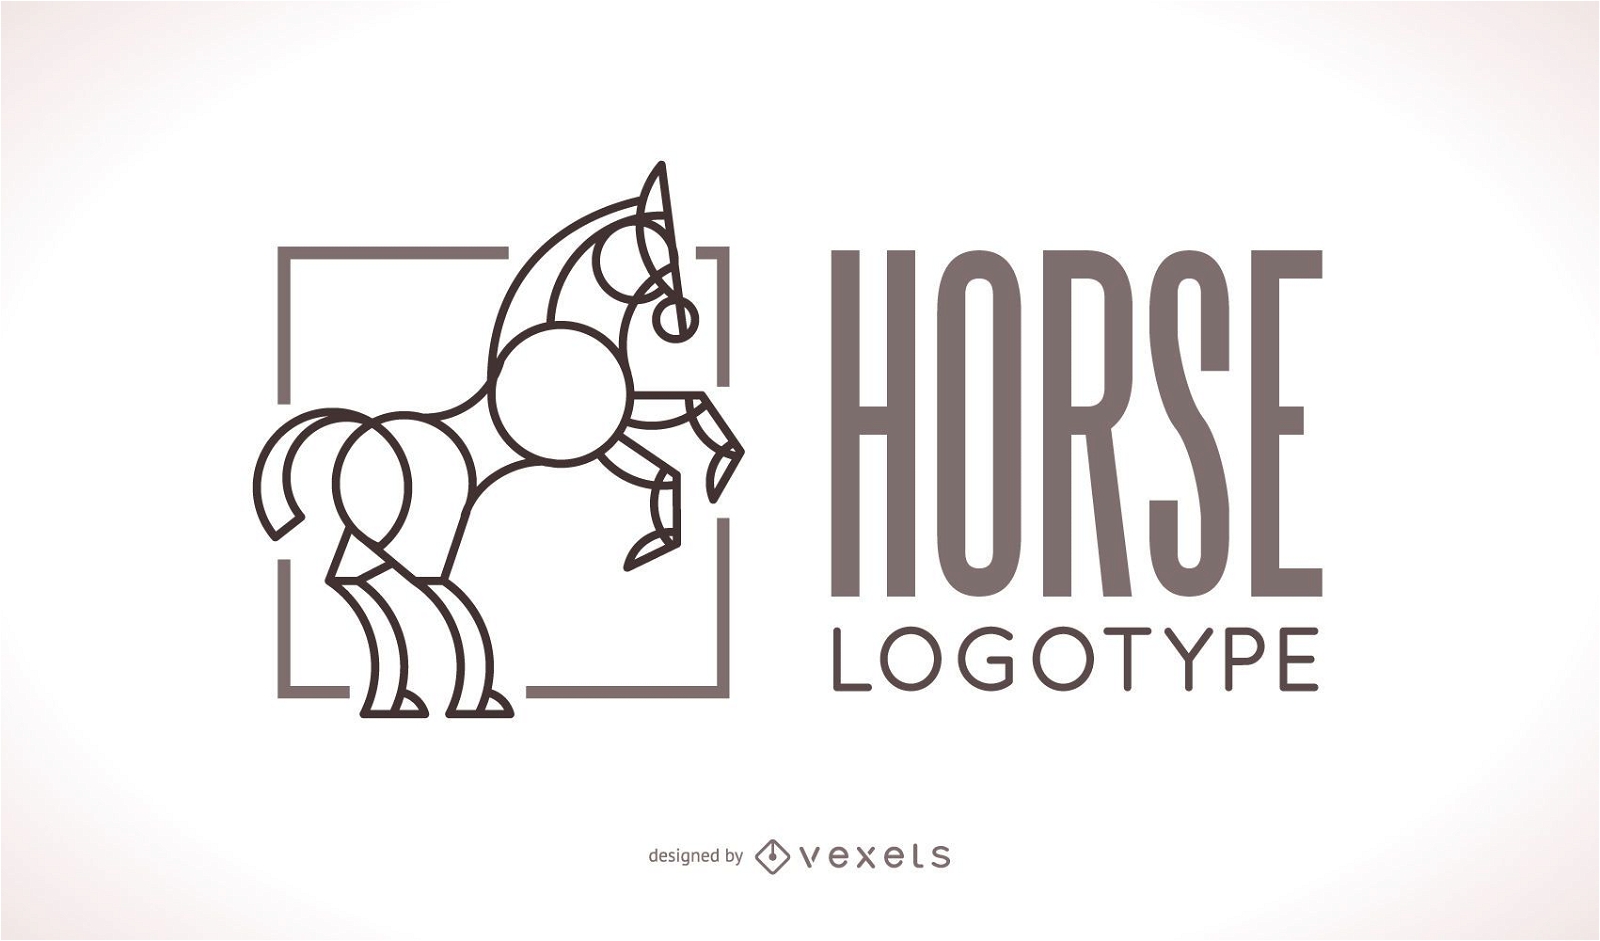 Geometric horse logo template